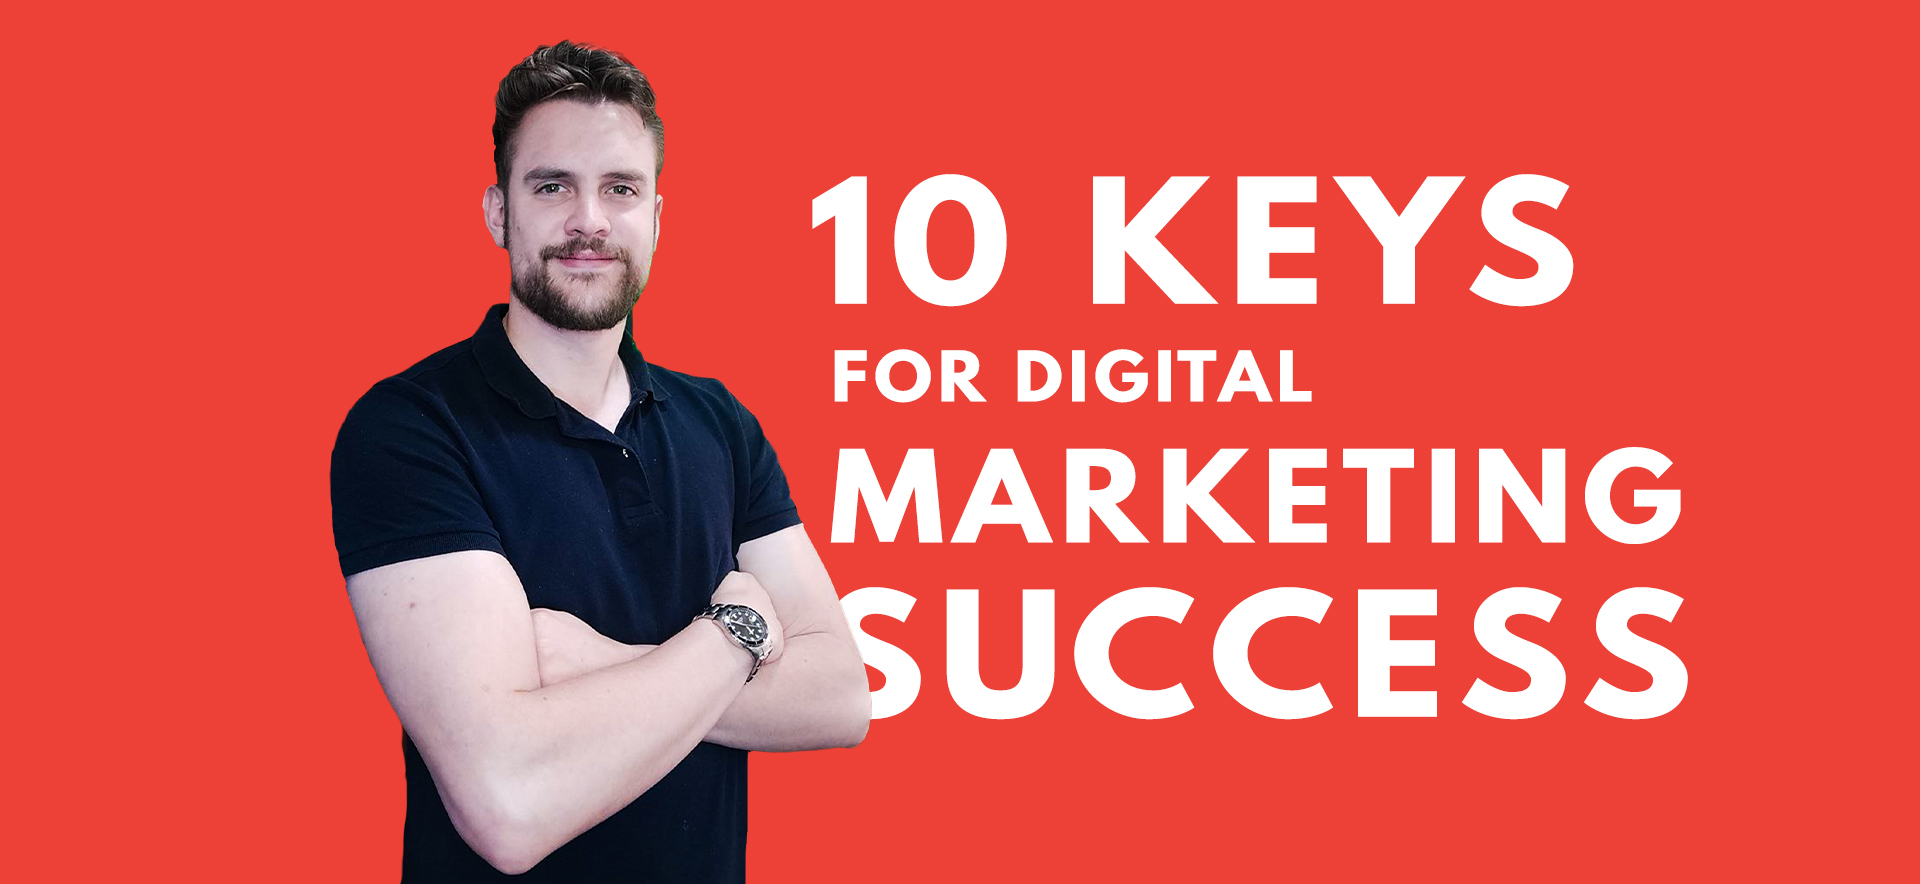 10 keys to digital marketing success